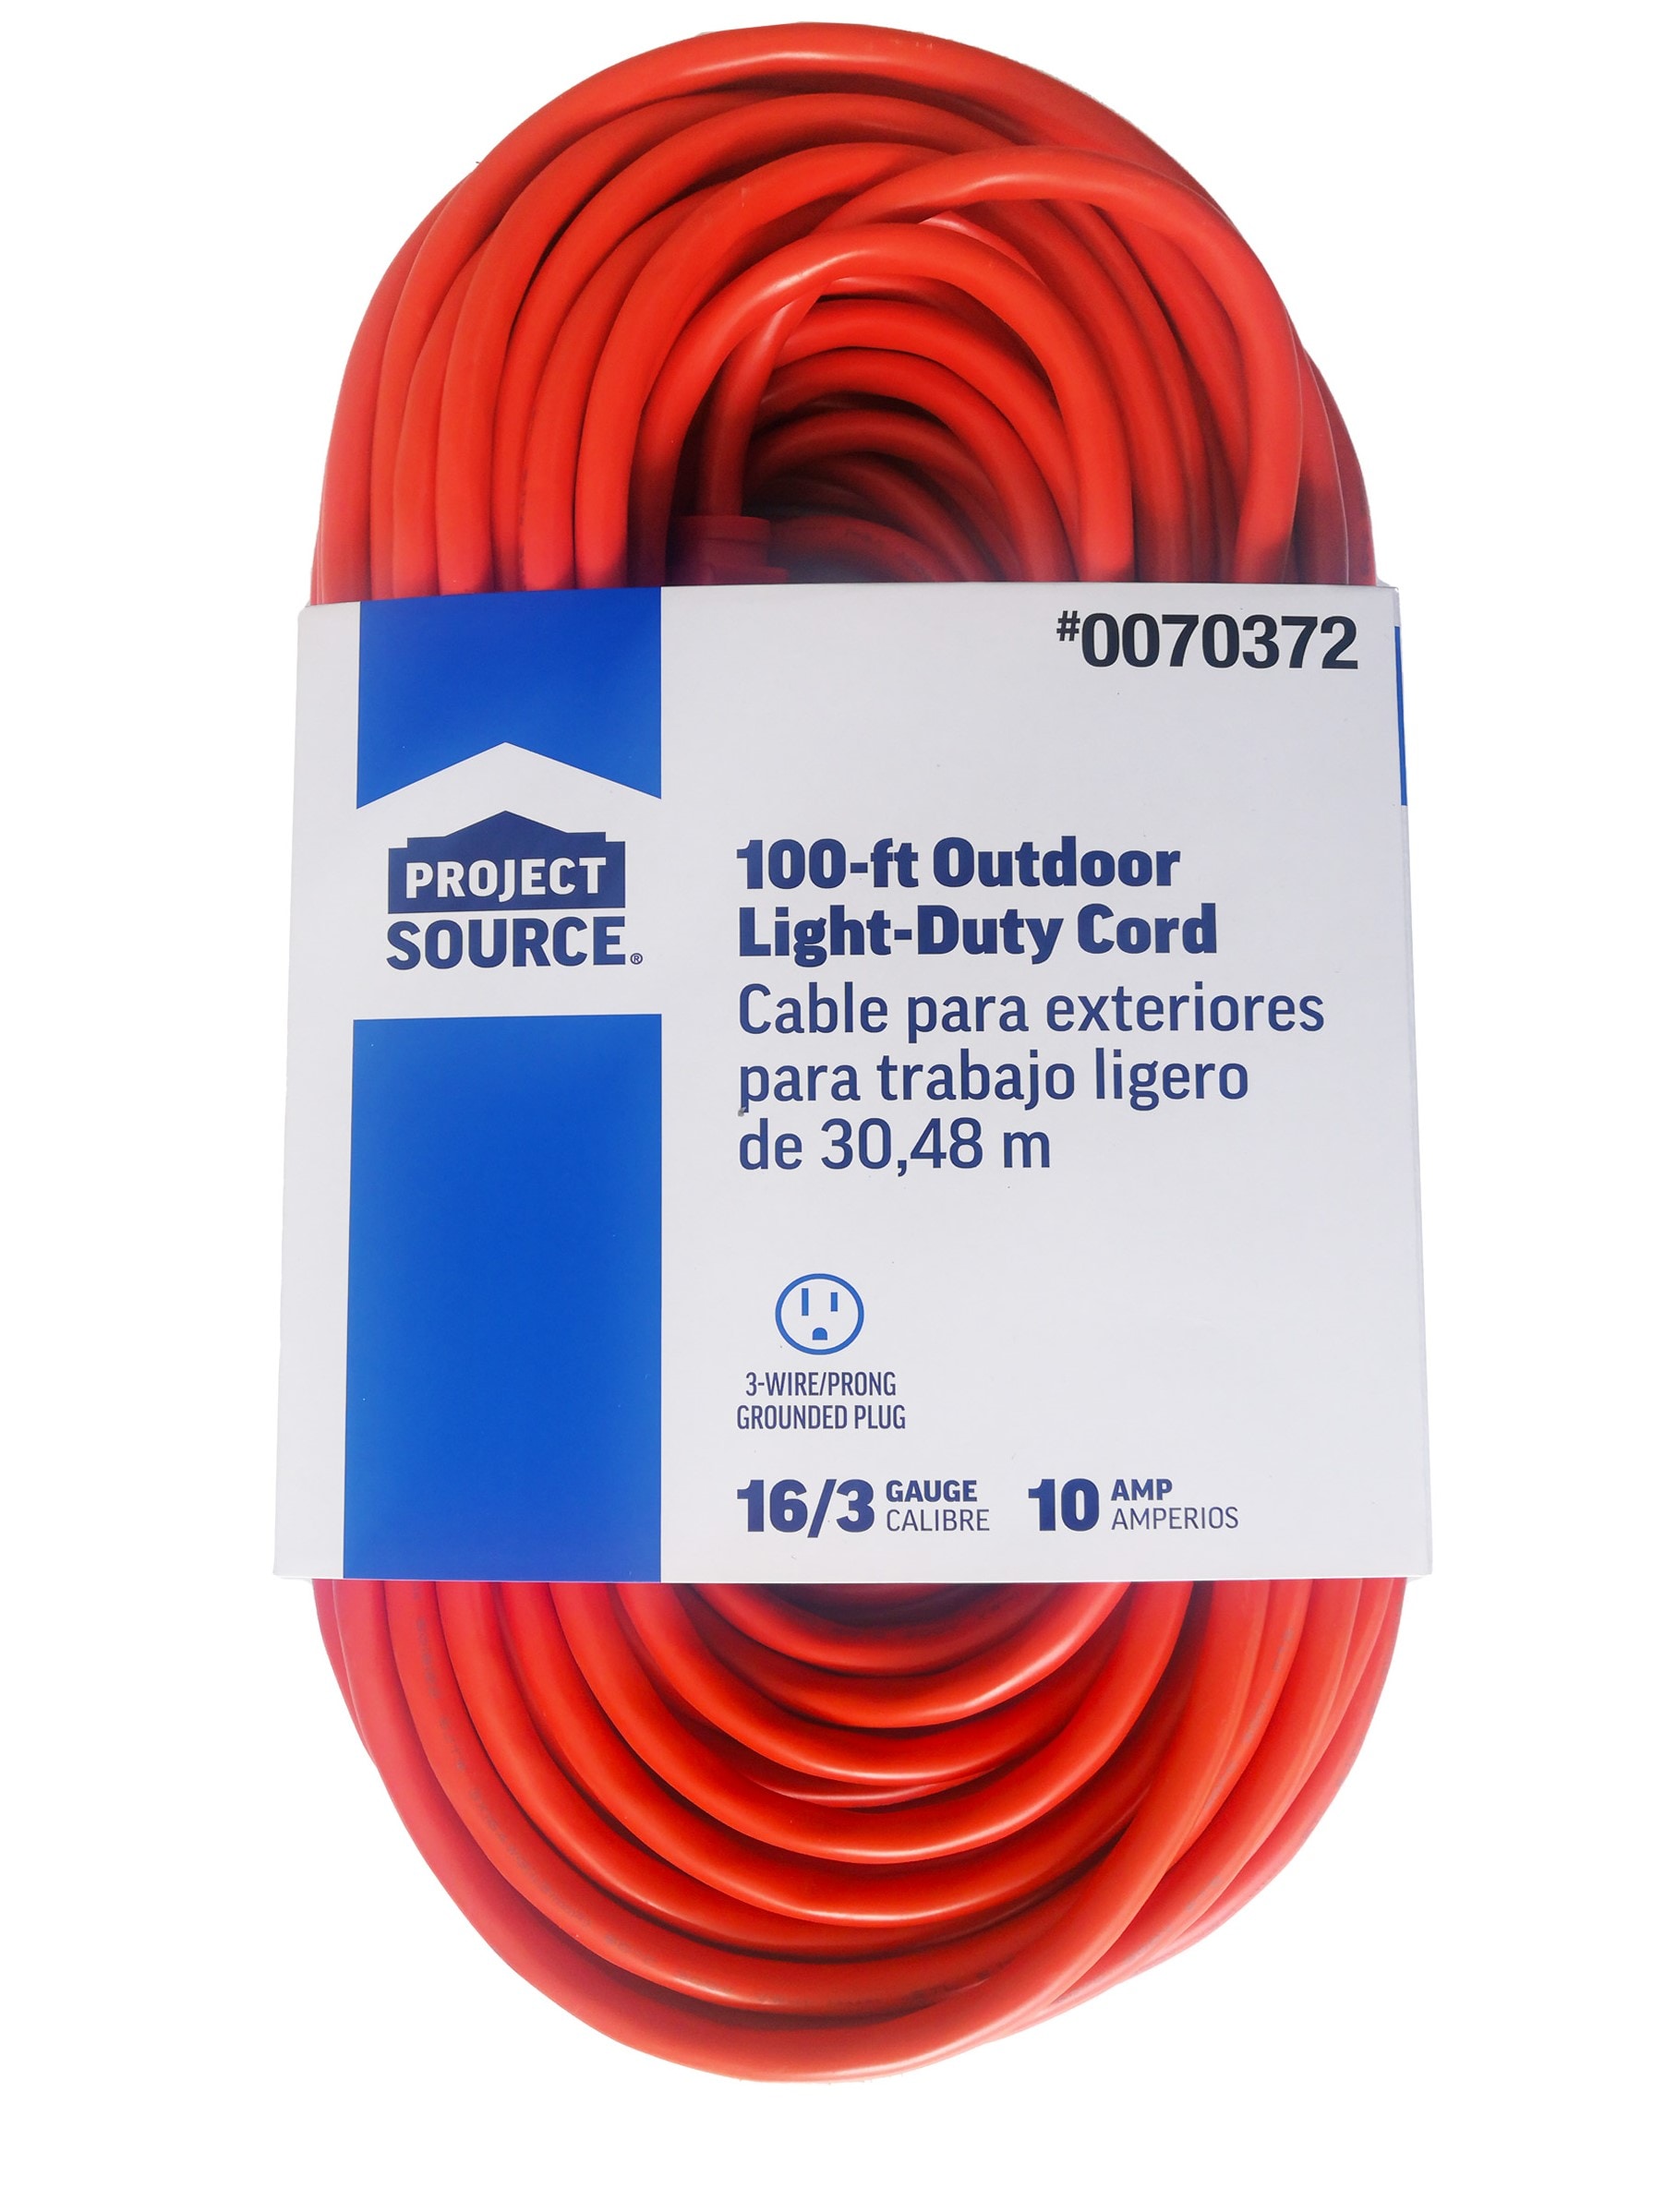 50 Feet, 16/3 gauge Vinyl Outdoor Extension Cord In Orange With 3-Prong Plug 